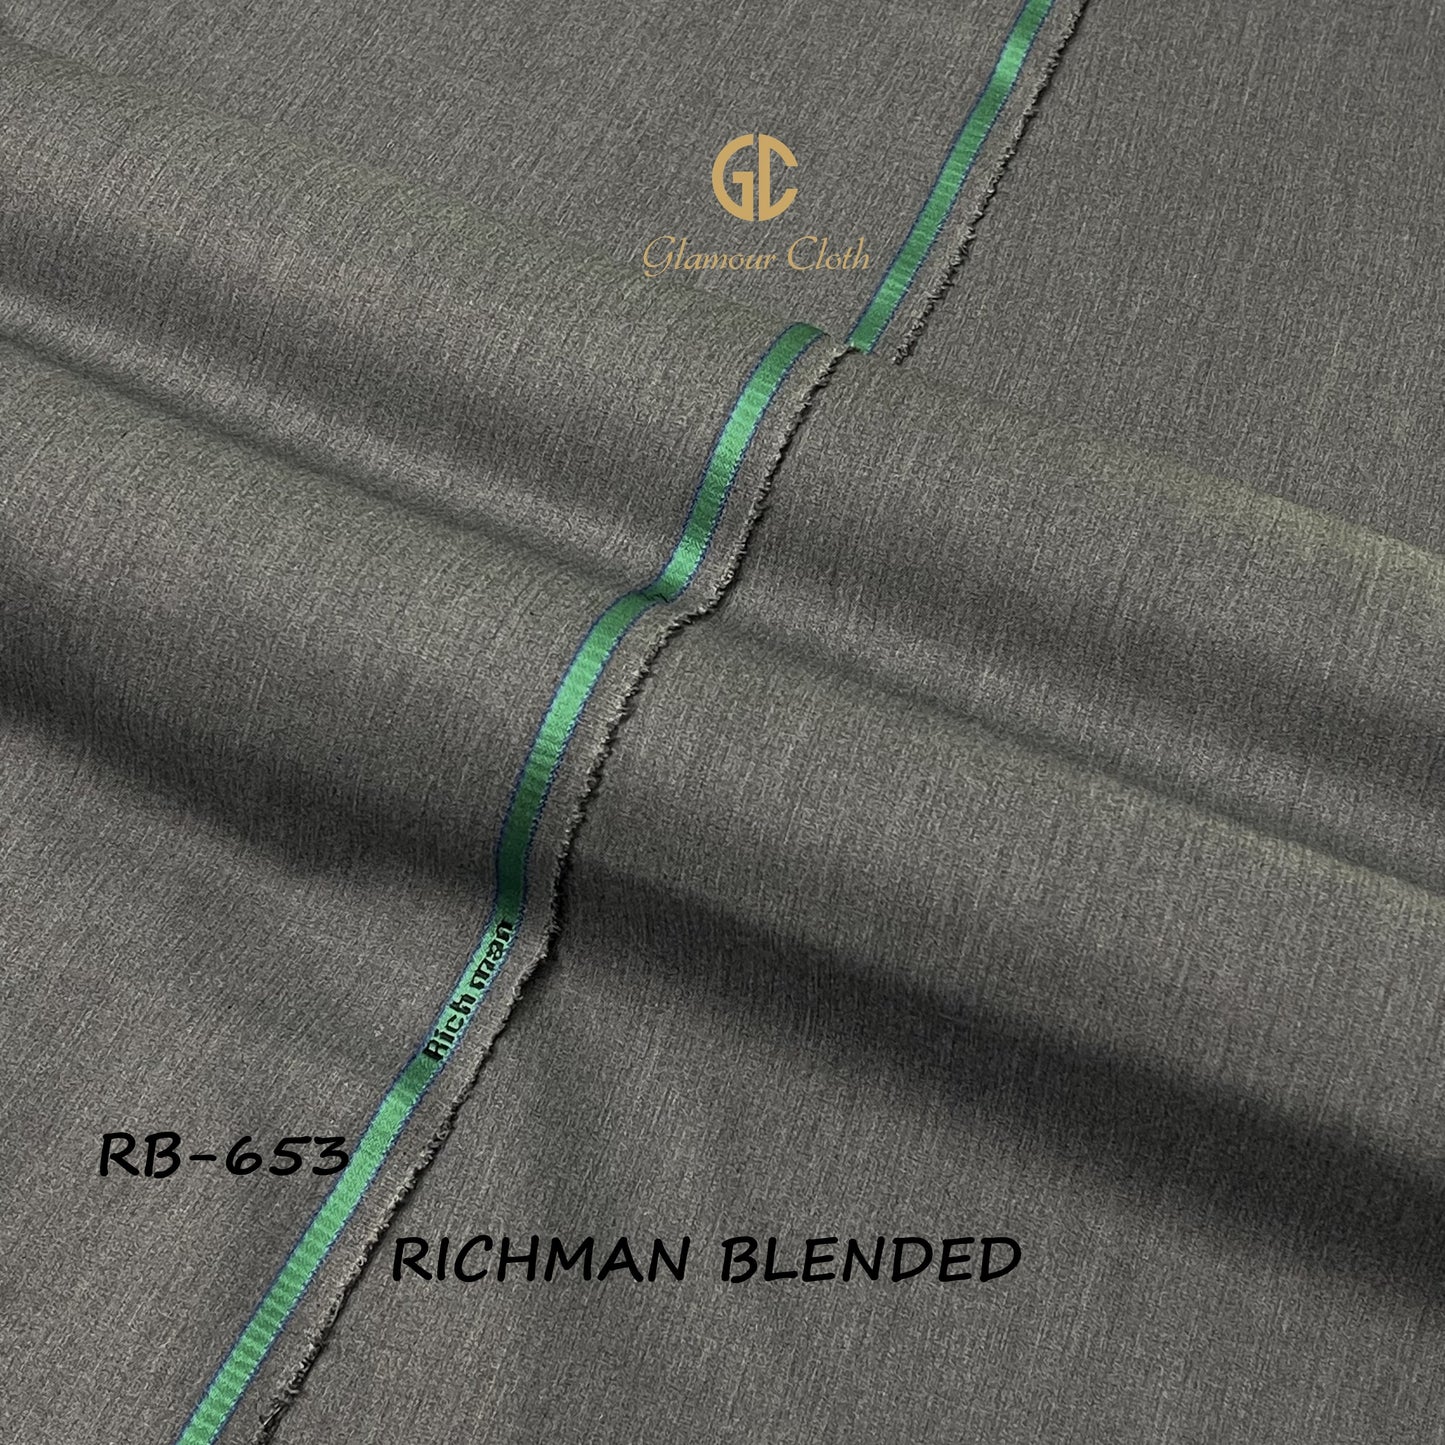 Richman Blended RB-653